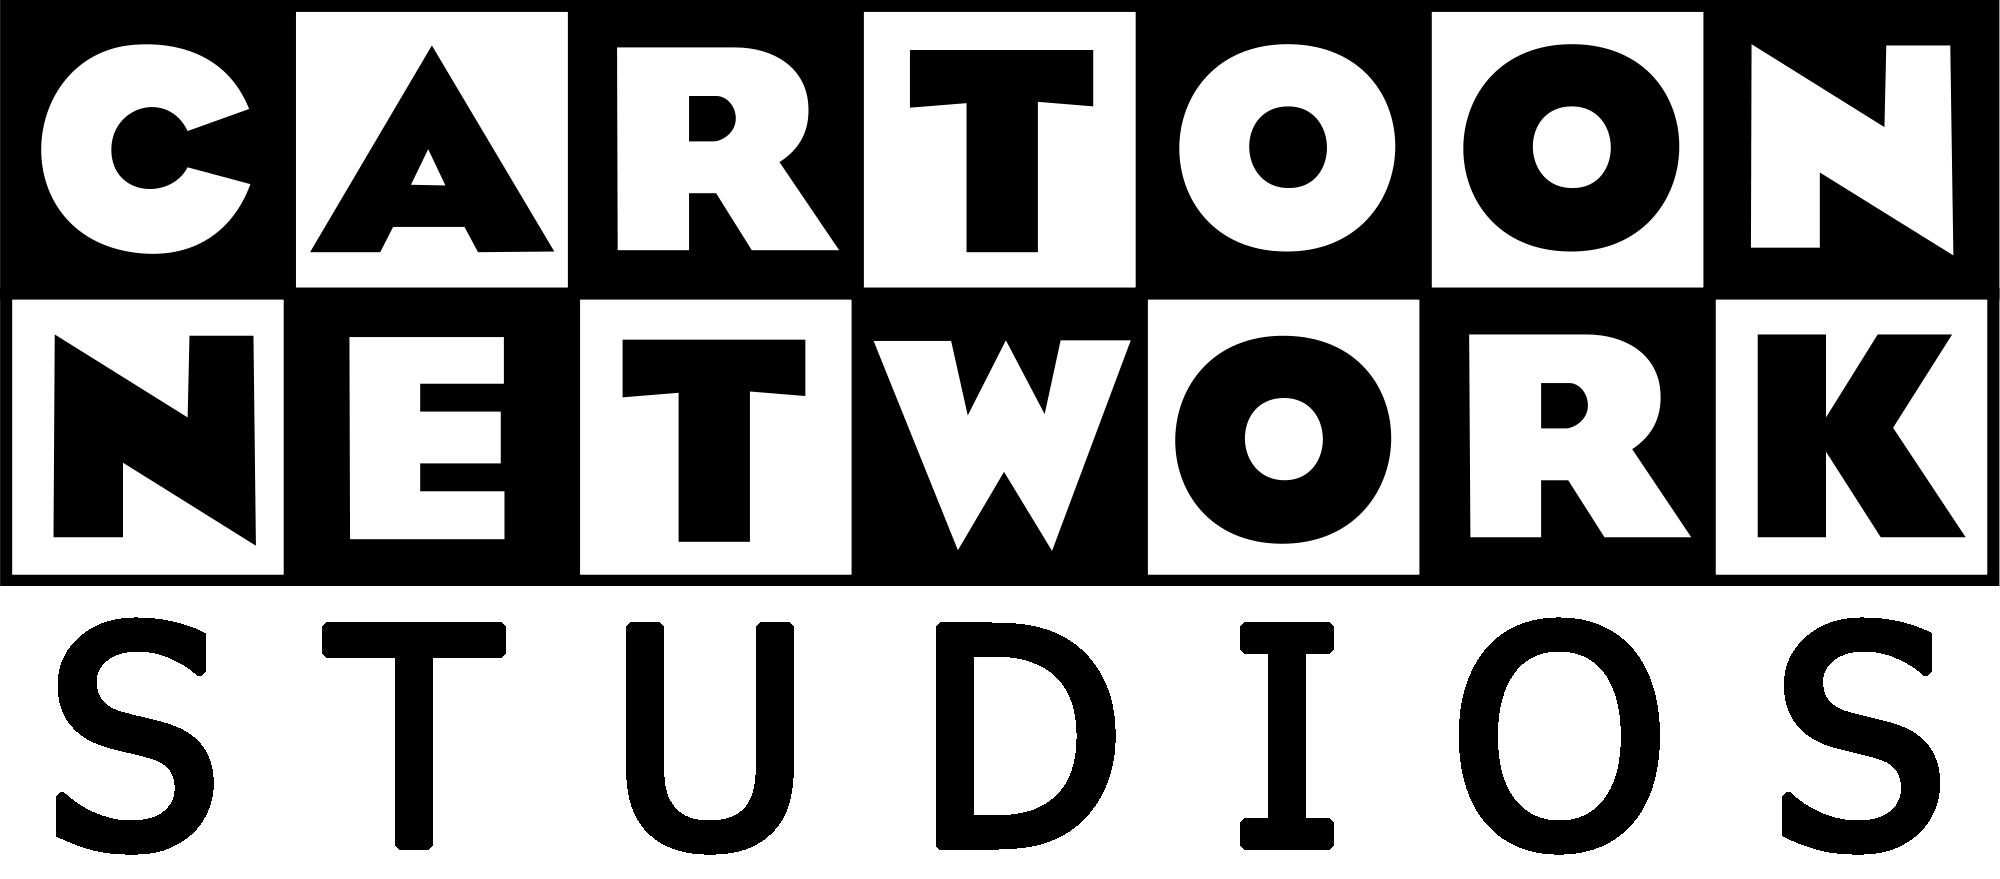 Cartoon Network Studios Logo - Cartoon Network Studios 1st logo v1.png